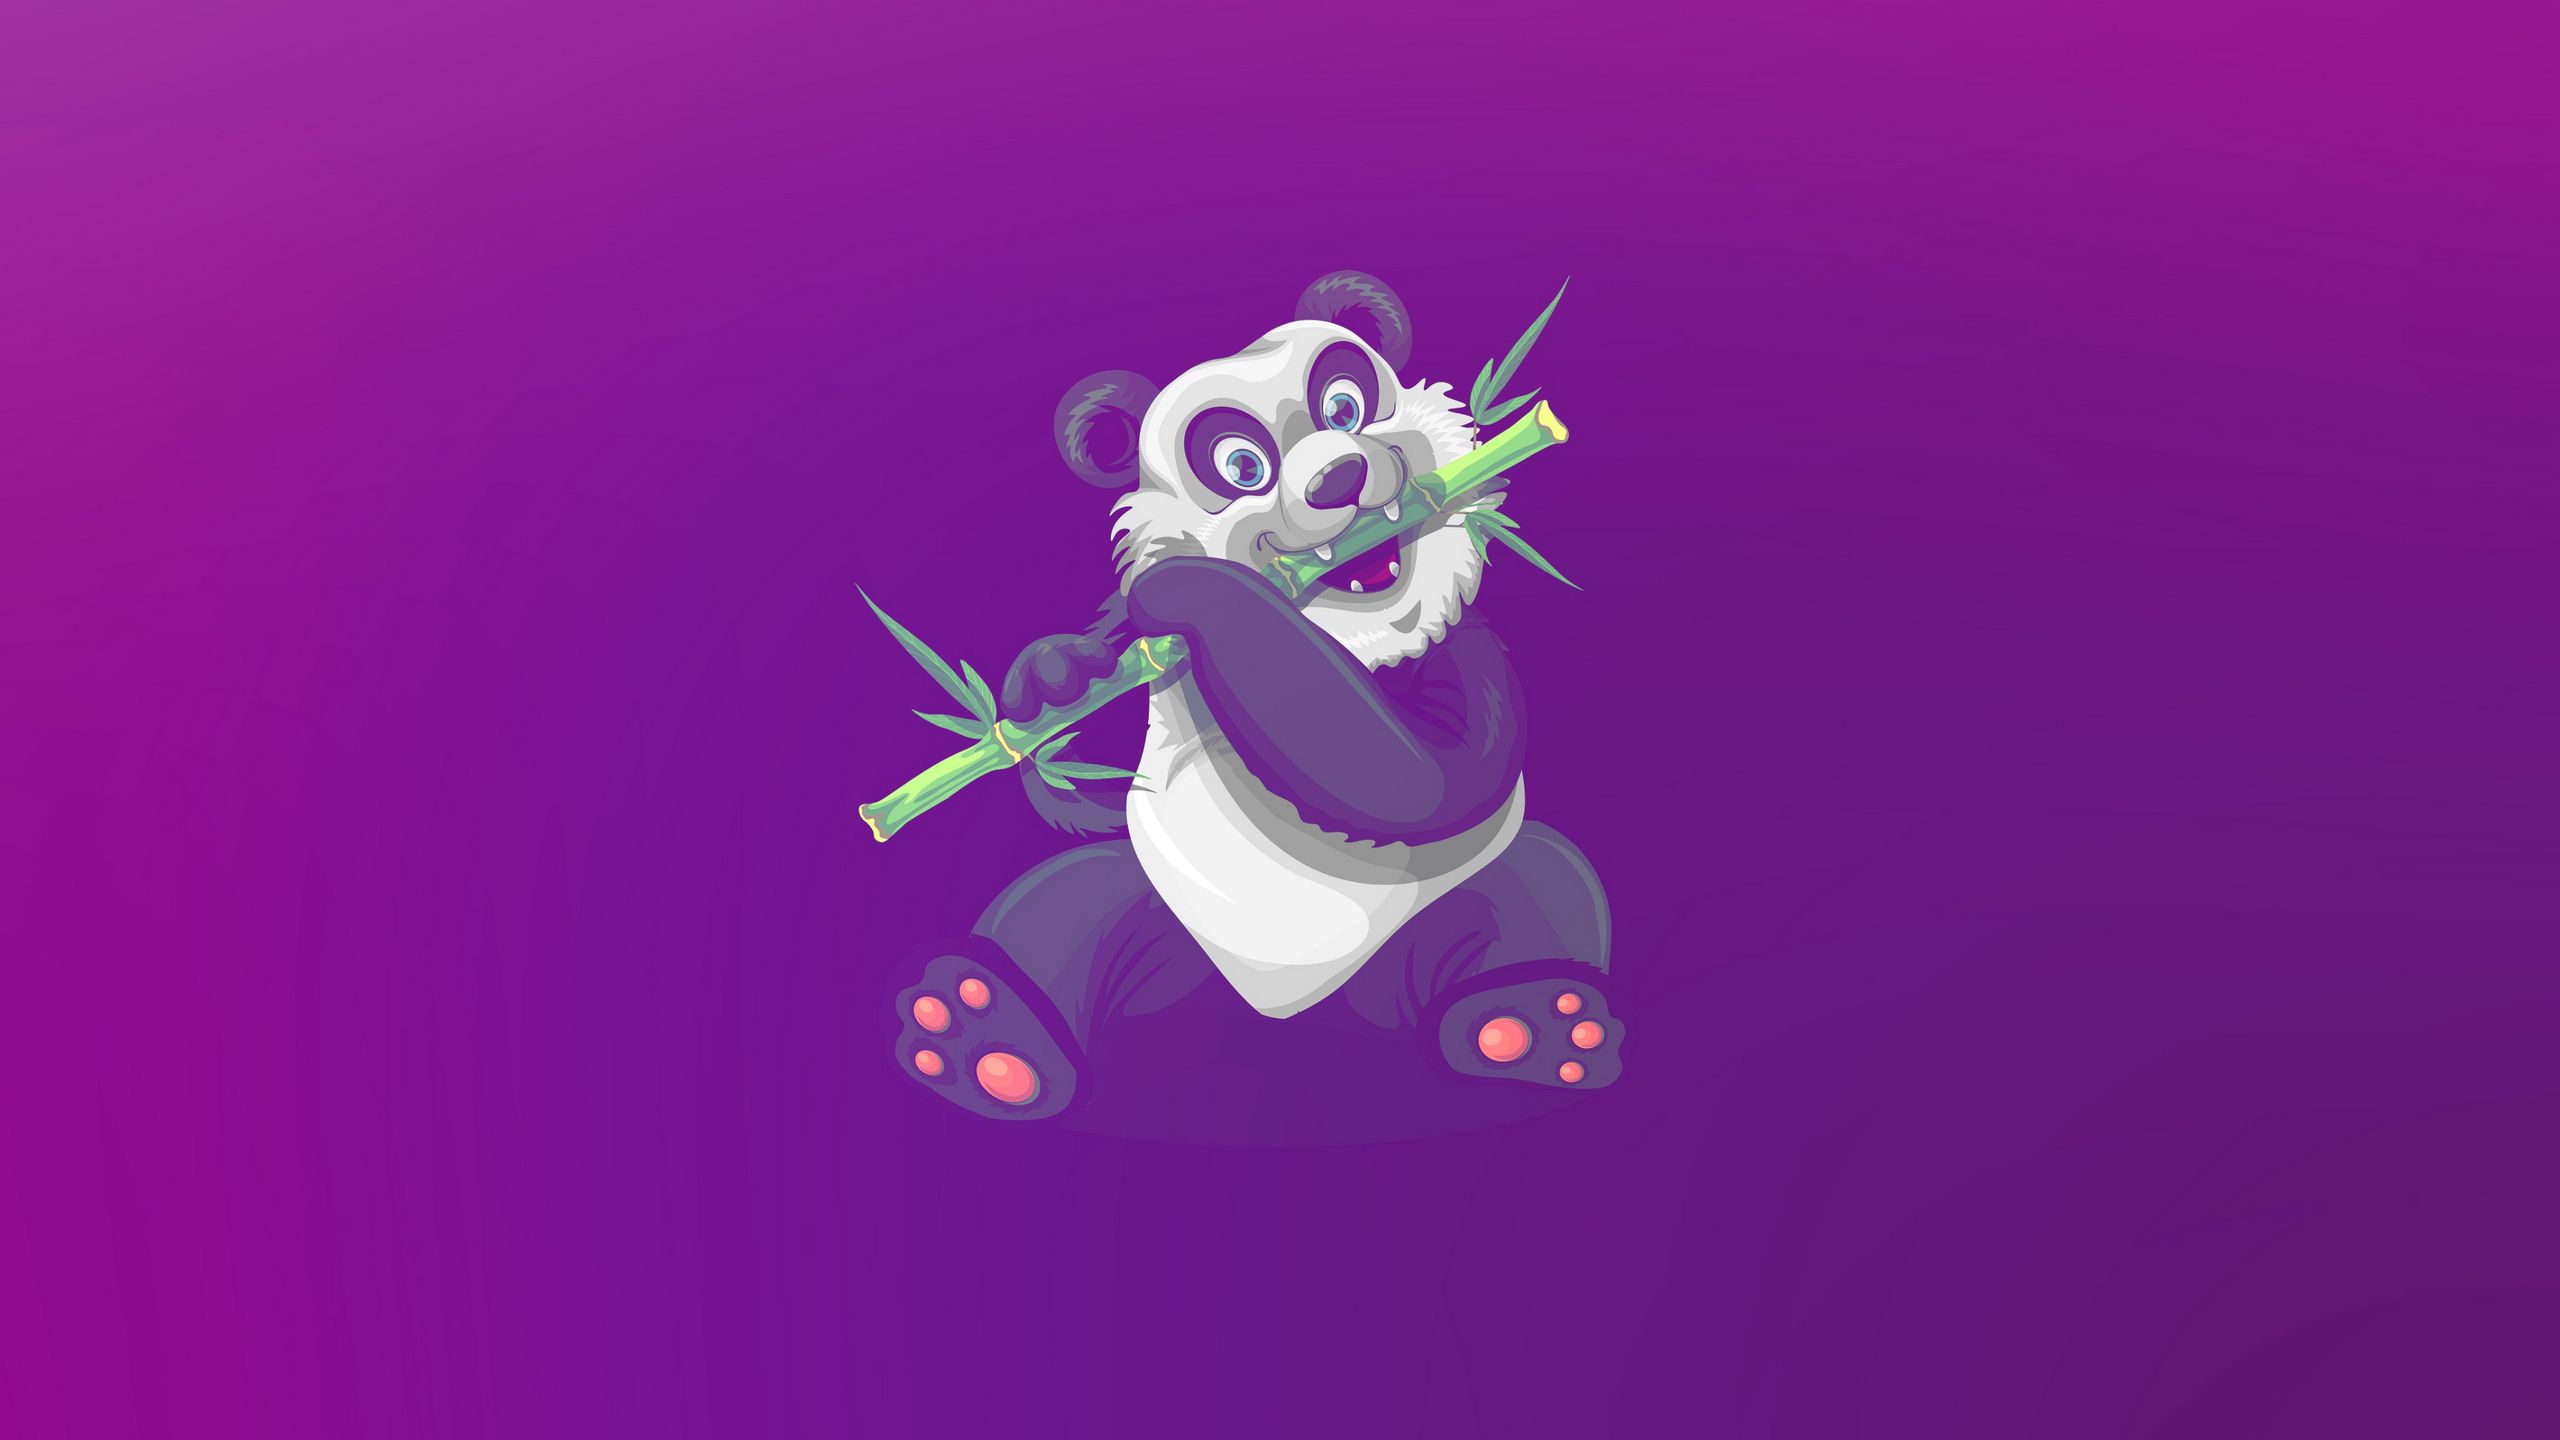 Download wallpaper 2560x1440 panda, art, bamboo, cute widescreen 16:9 HD background